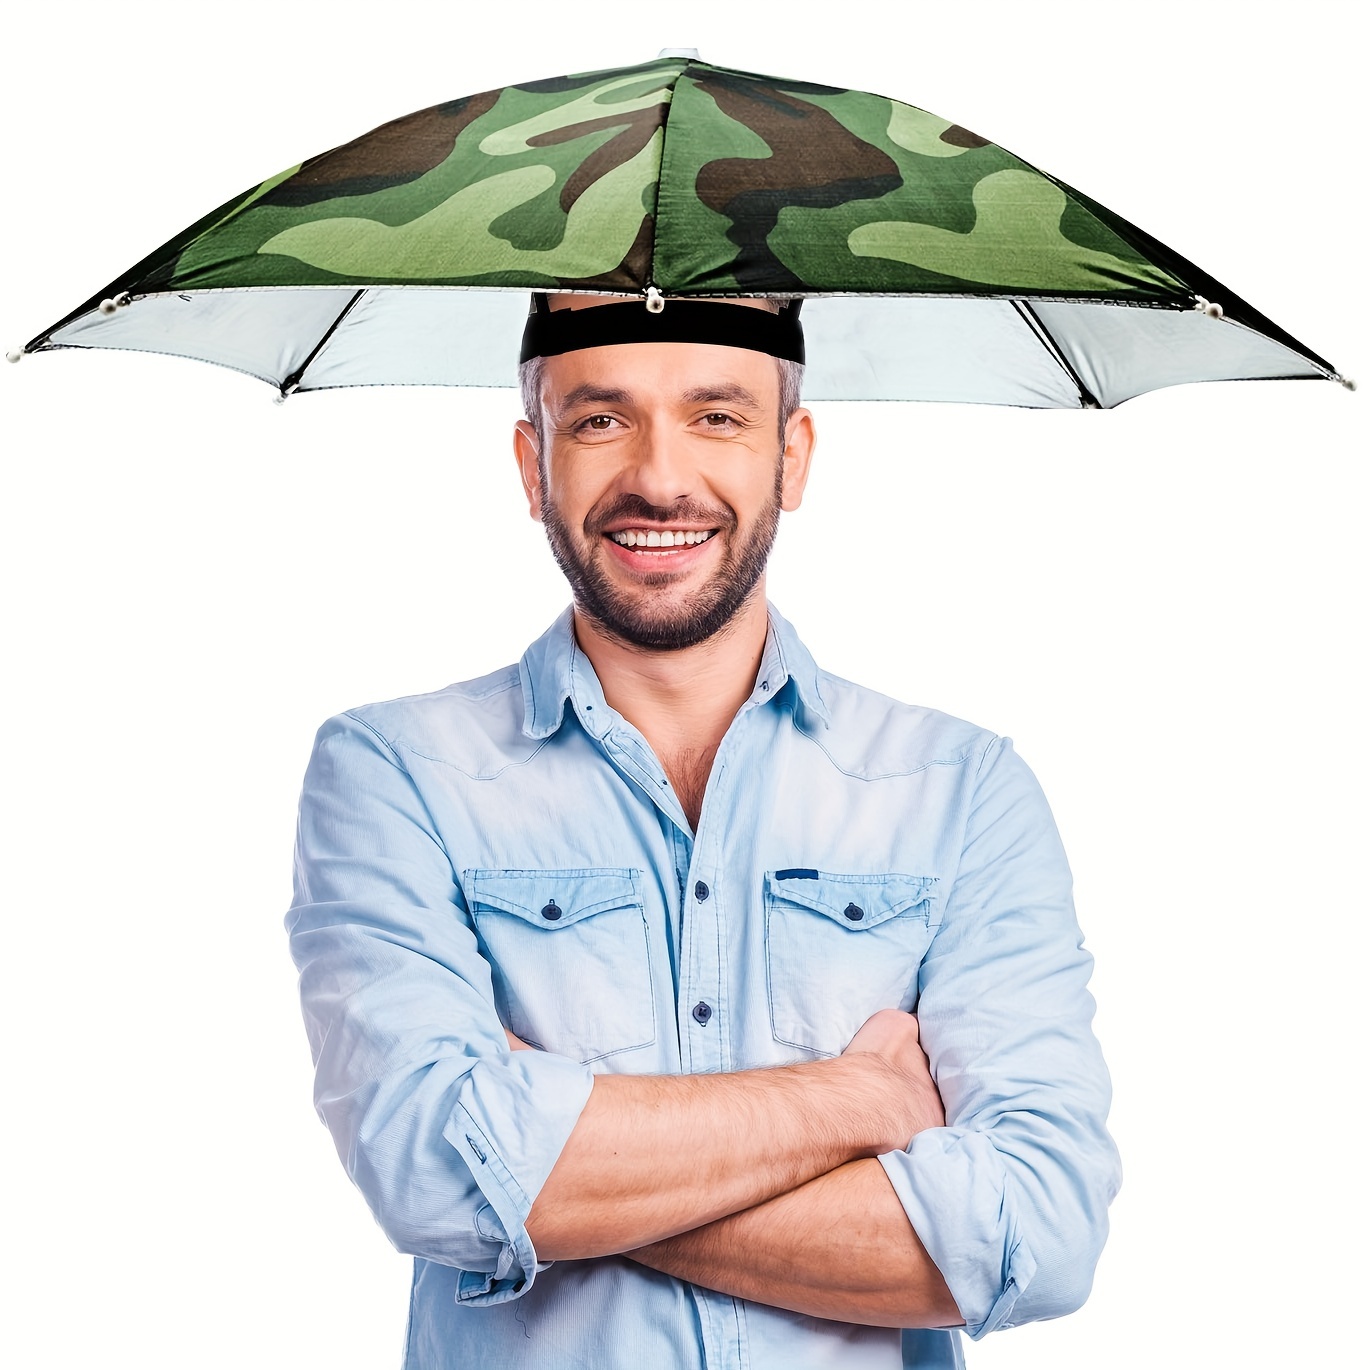 Comprar Paraguas plegable sombrero gorra sombreros paraguas para